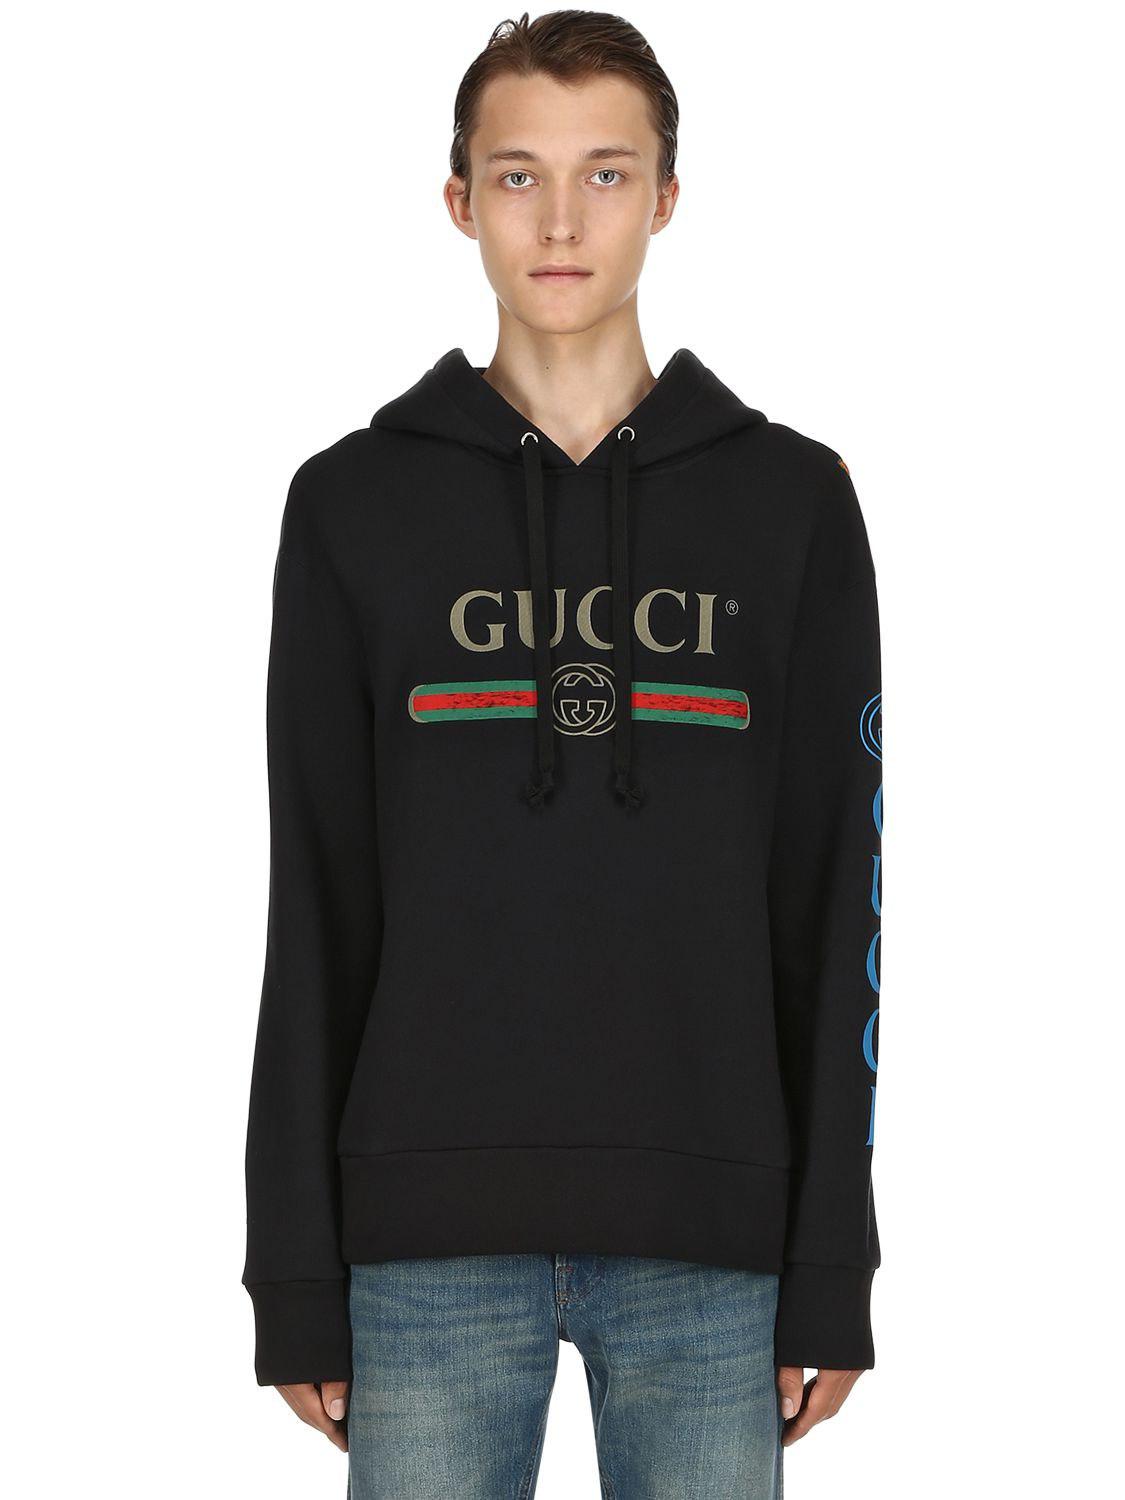 classic gucci sweatshirt